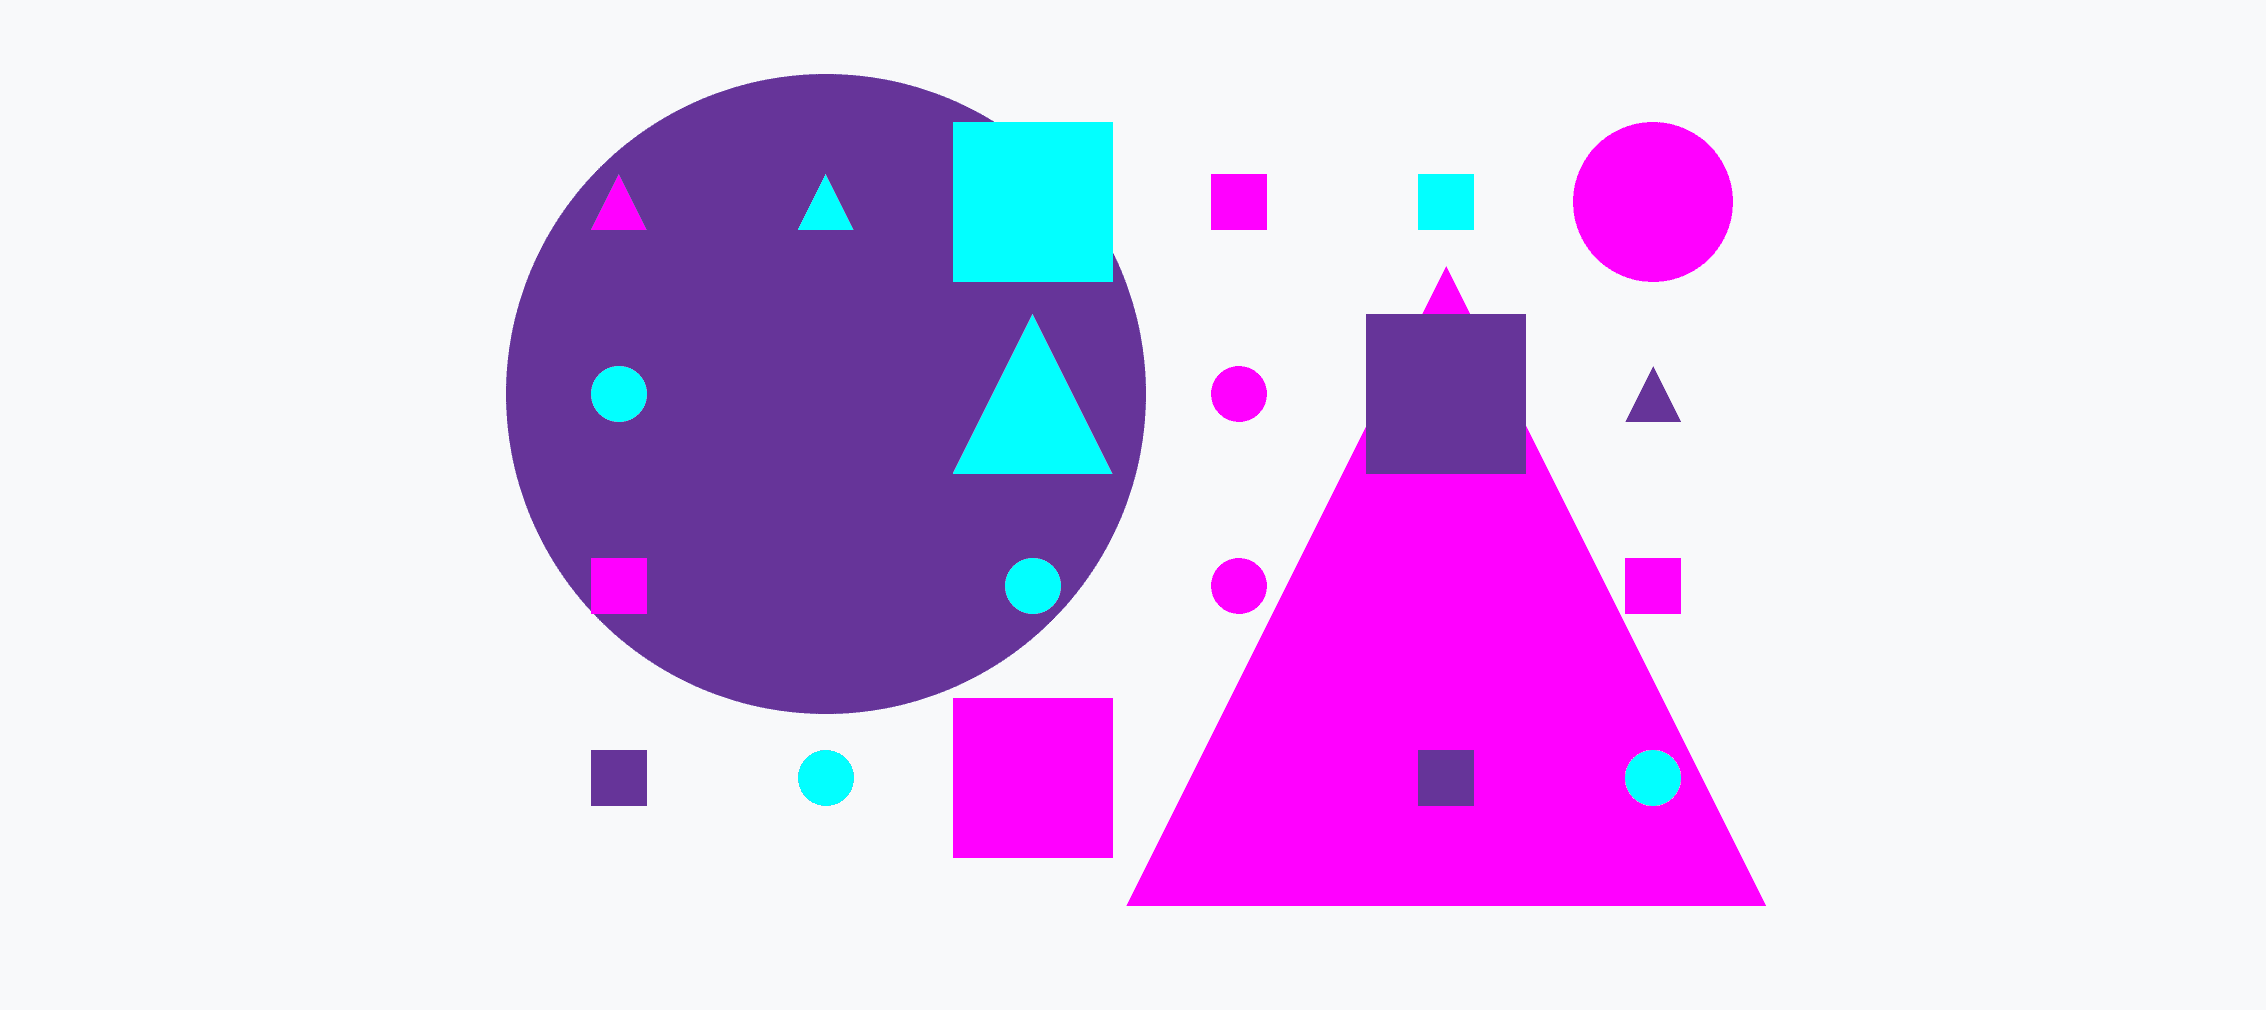 Kotak, segitiga, dan persegi panjang berwarna-warni.